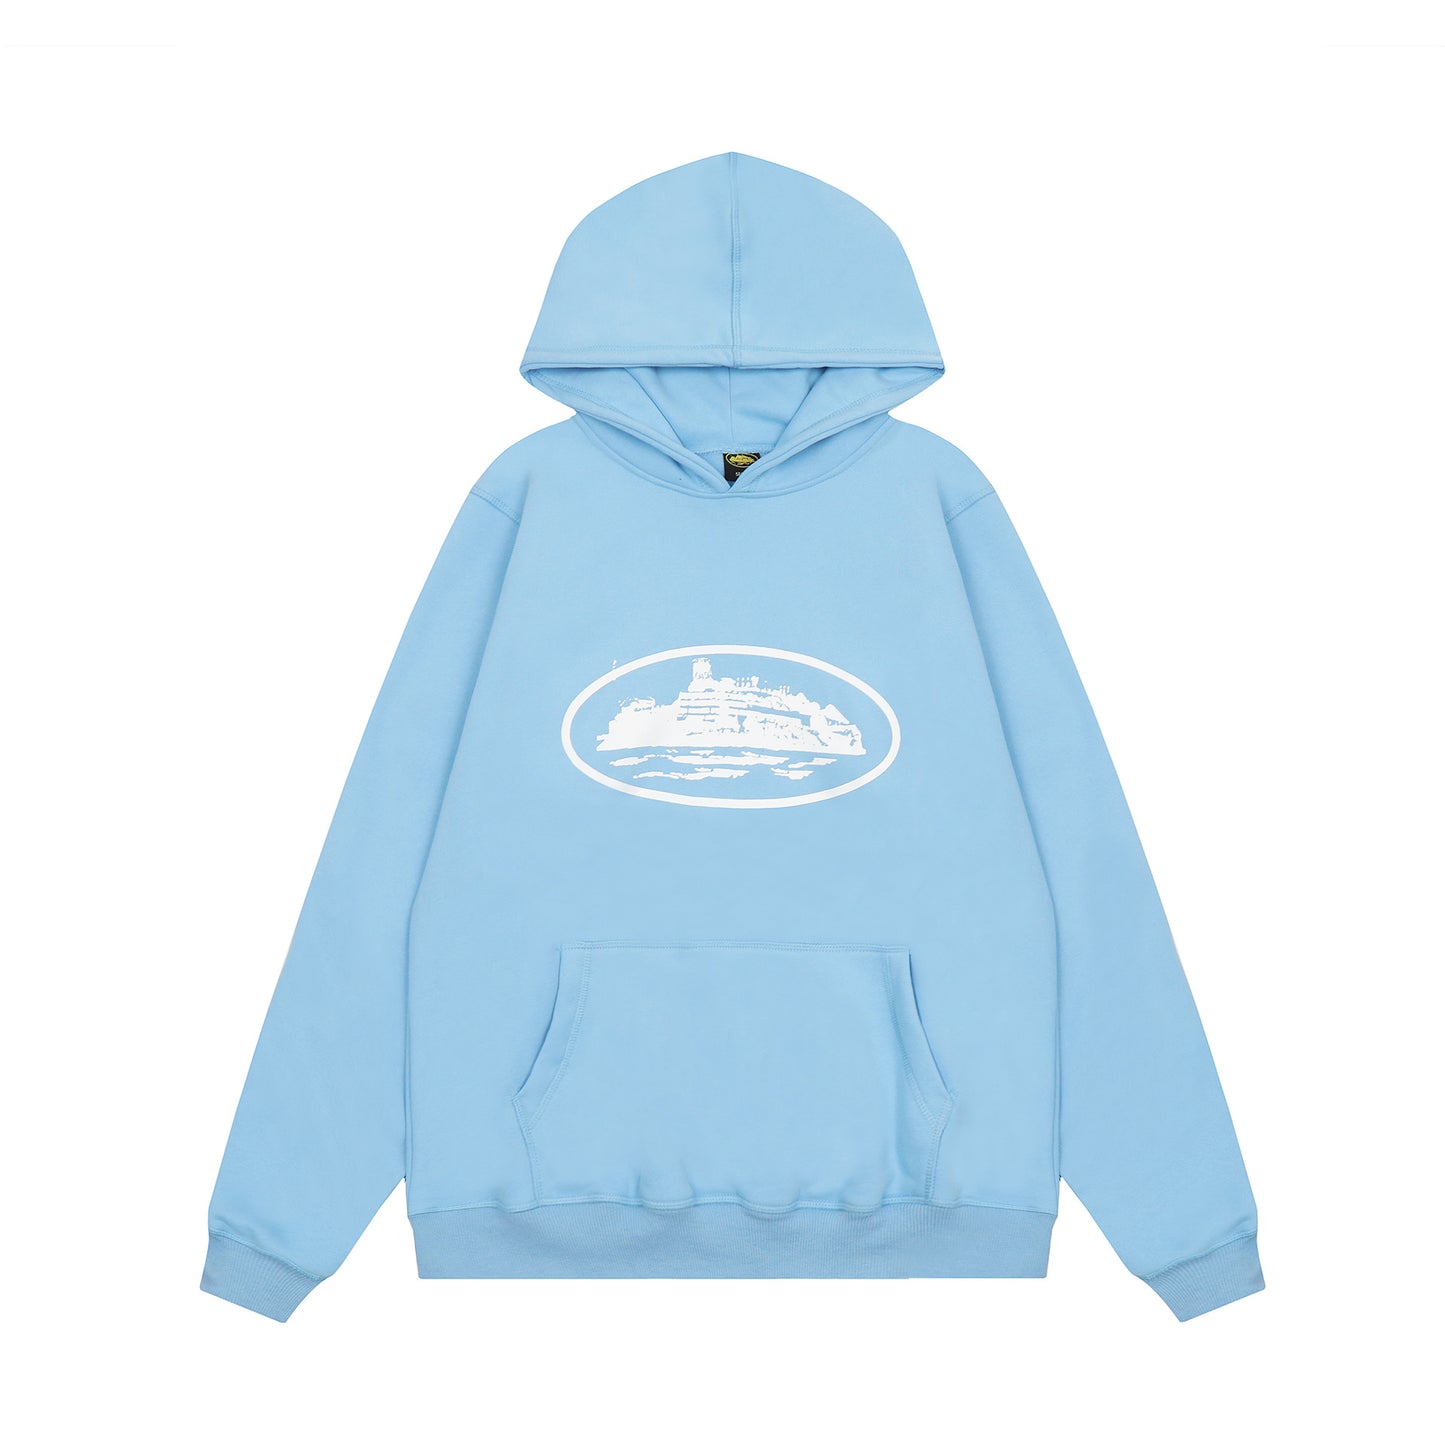 Corteiz Alcatraz Hoodie Hooded Long Sleeve Sweatshirt - NAVY BLUE